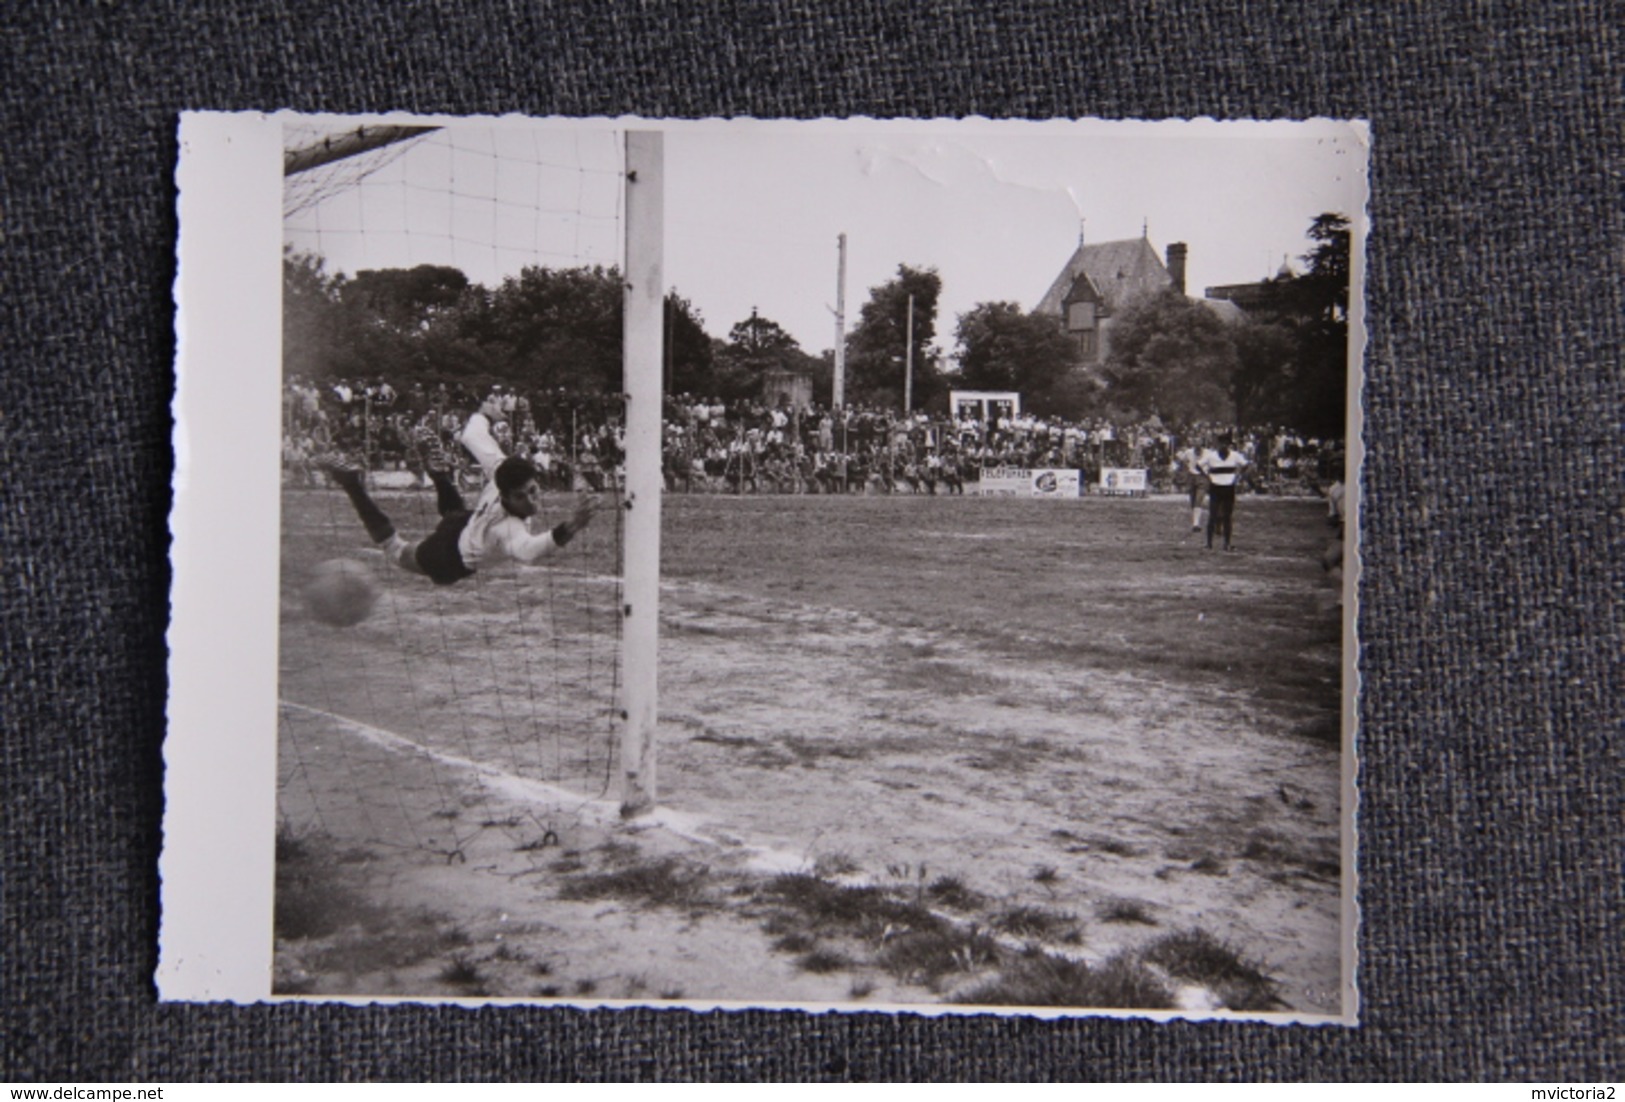 FOOTBALL à AGDE, Année 60 : 4 Photographies. - Sports